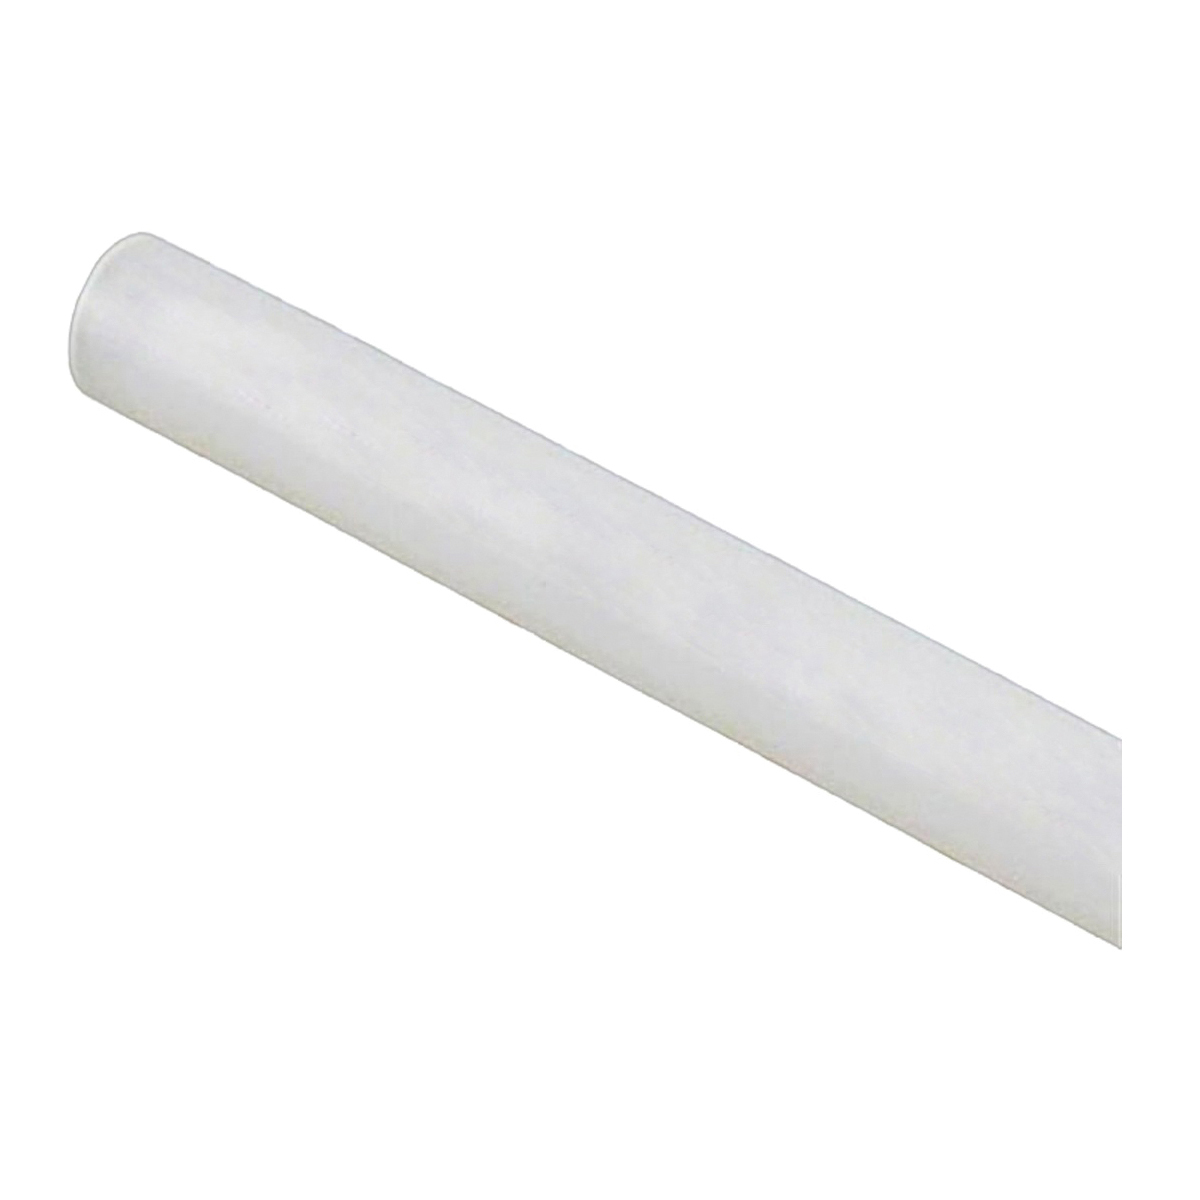 SAFEPEX Pro 16050 PEX-A Straight Stick Pipe Tubing, 3/8 in, White, 5 ft L